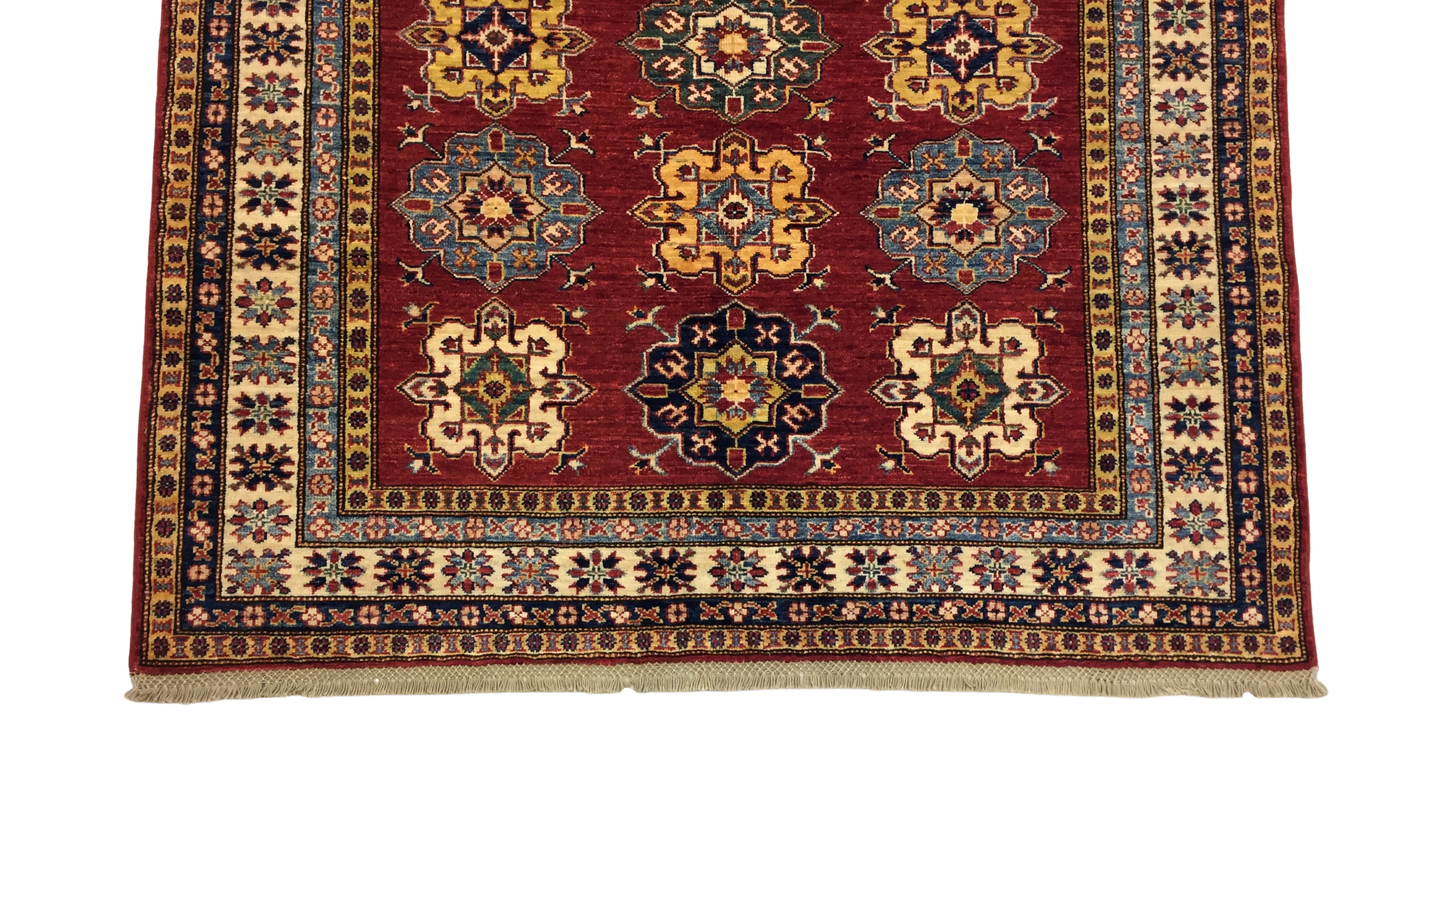 Şirvan Bicolor Carpet 207 X 147 cm - Alfombras de Estambul -  Turkish Carpets - Alfombras de Estambul